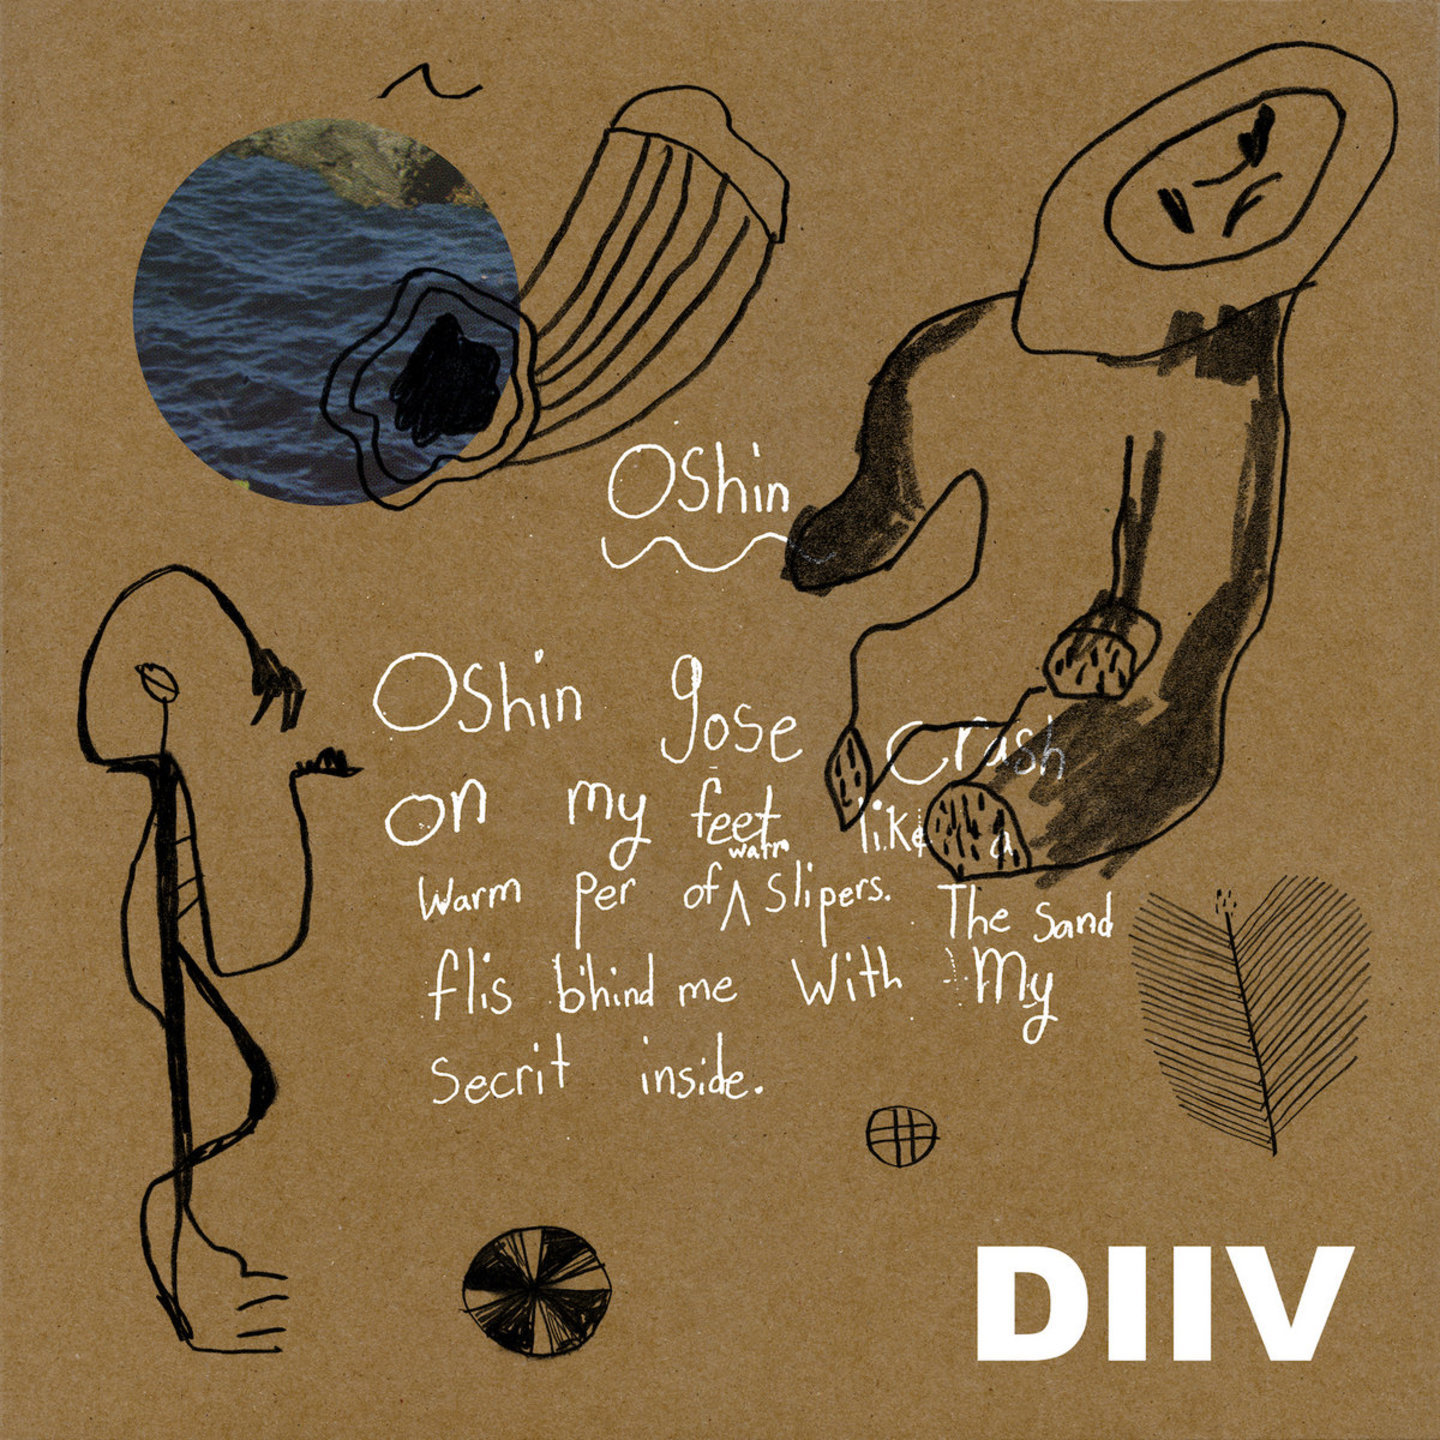 DIIV - Oshin 2xLP + Book (10th Anniversary Blue Marbled vinyl)